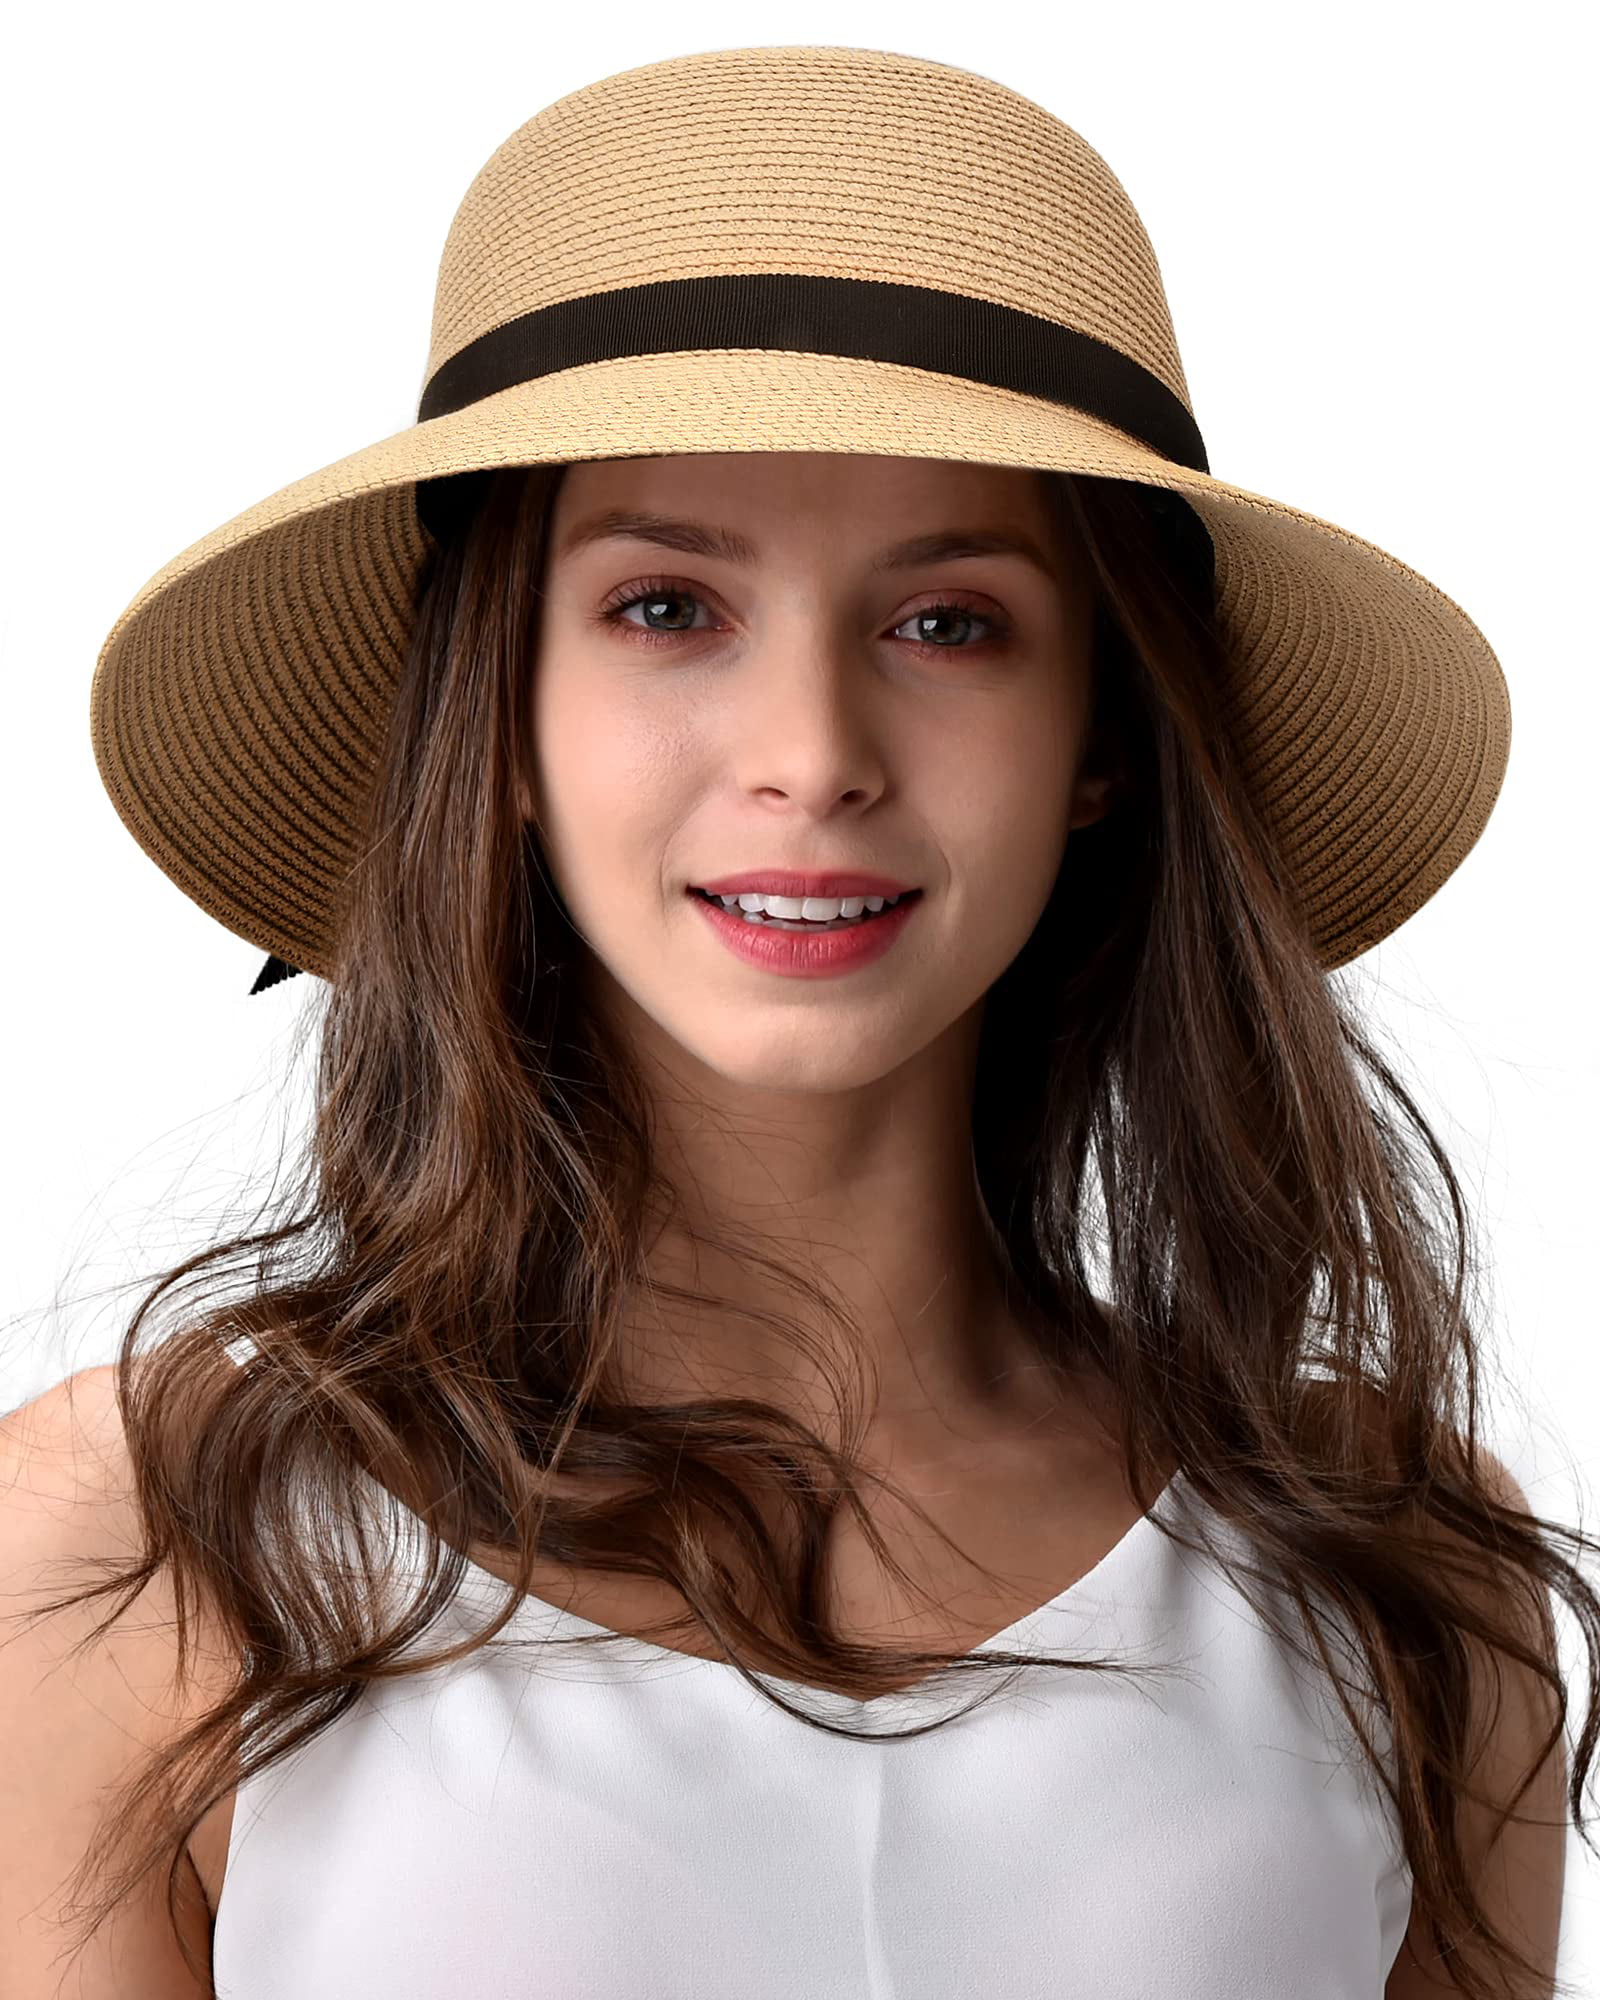 2019 Newest Women Sun Hats Wide Brim Straw Hats Female Summer Breathable Hats Beach hat 